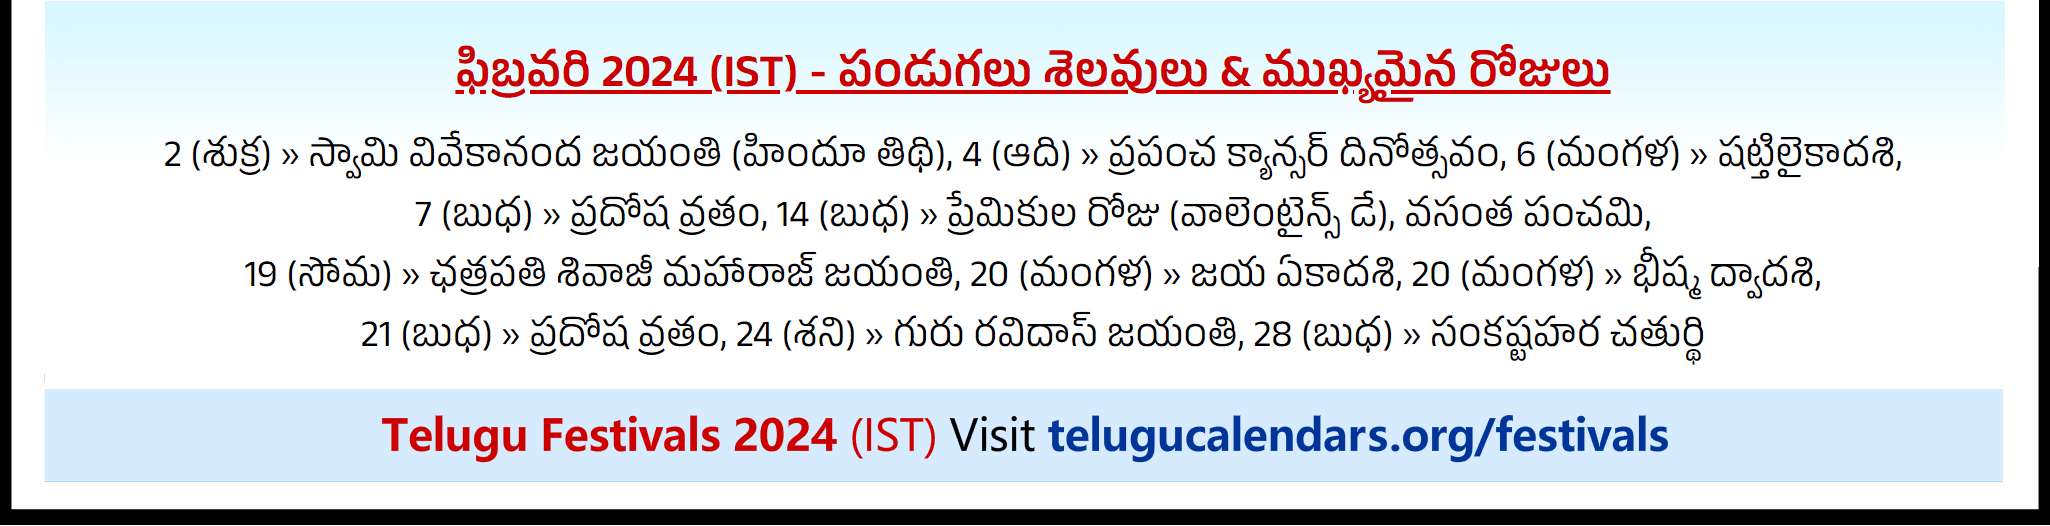 Telugu Festivals 2024 February New Jersey